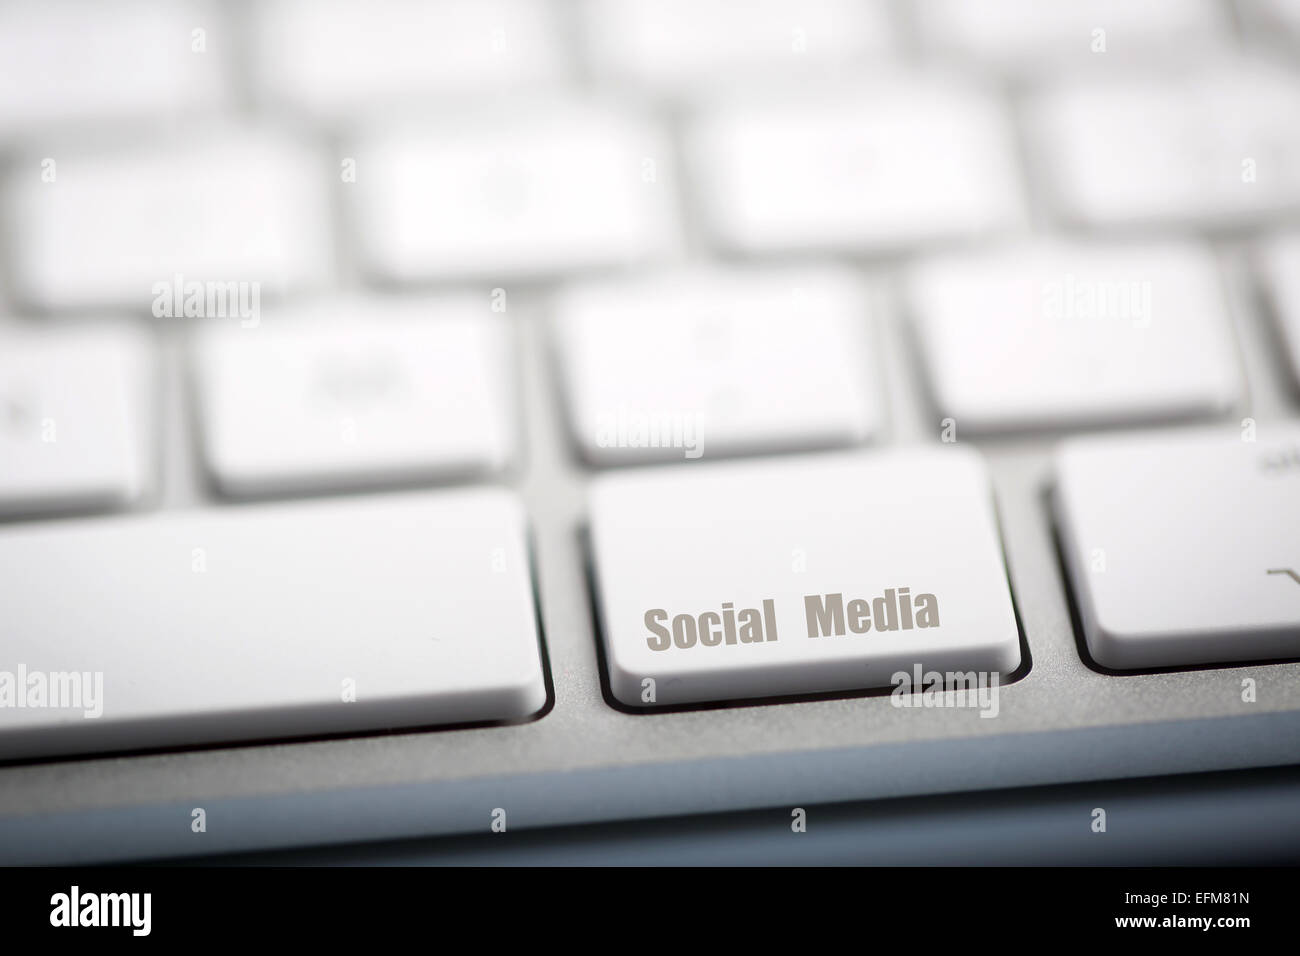 'Social Media' on metallic keyboard Stock Photo